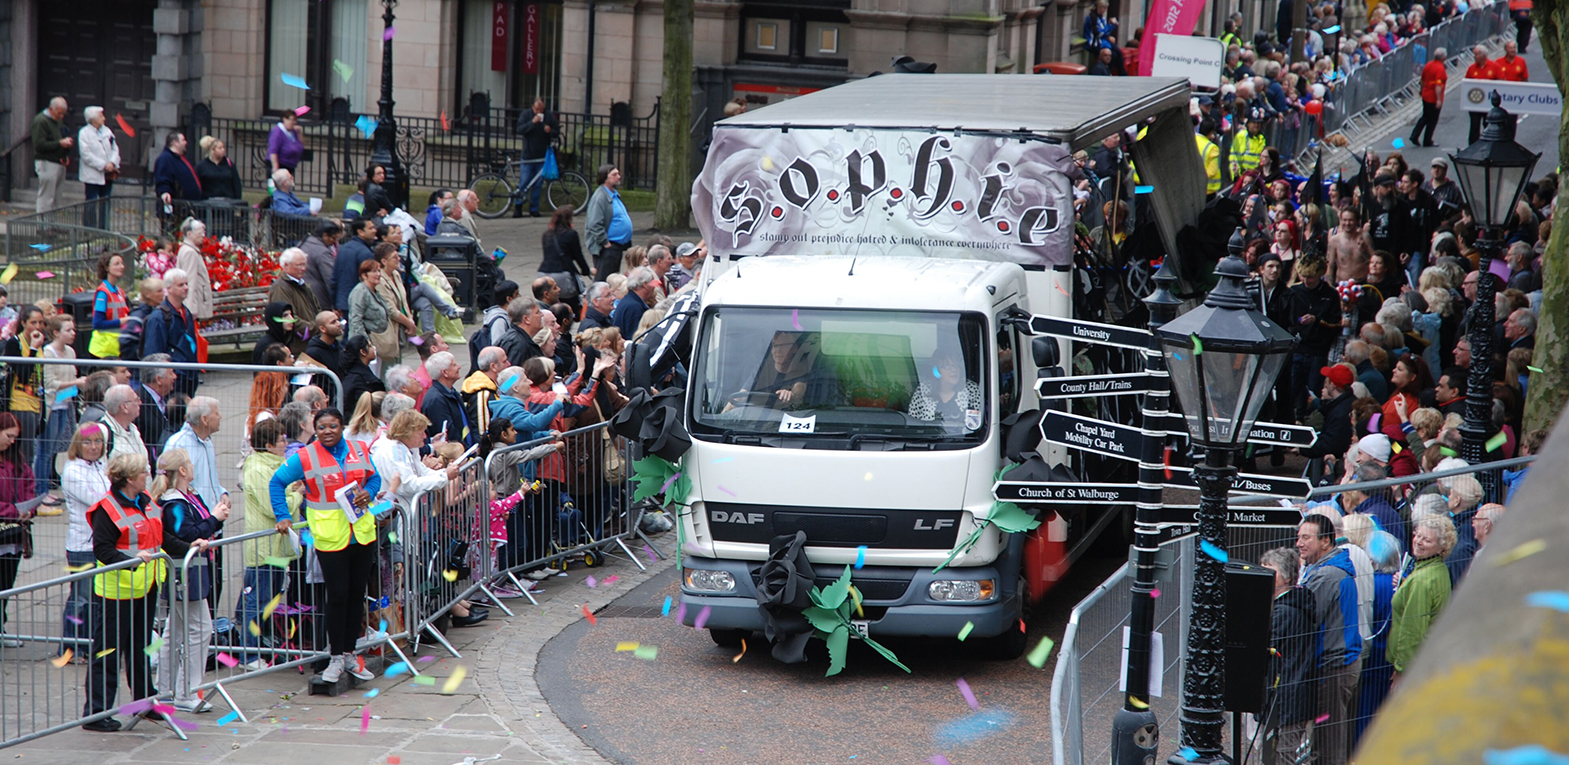 The Black Parade as part of Preston Guild 2012. A crowd follow a float.